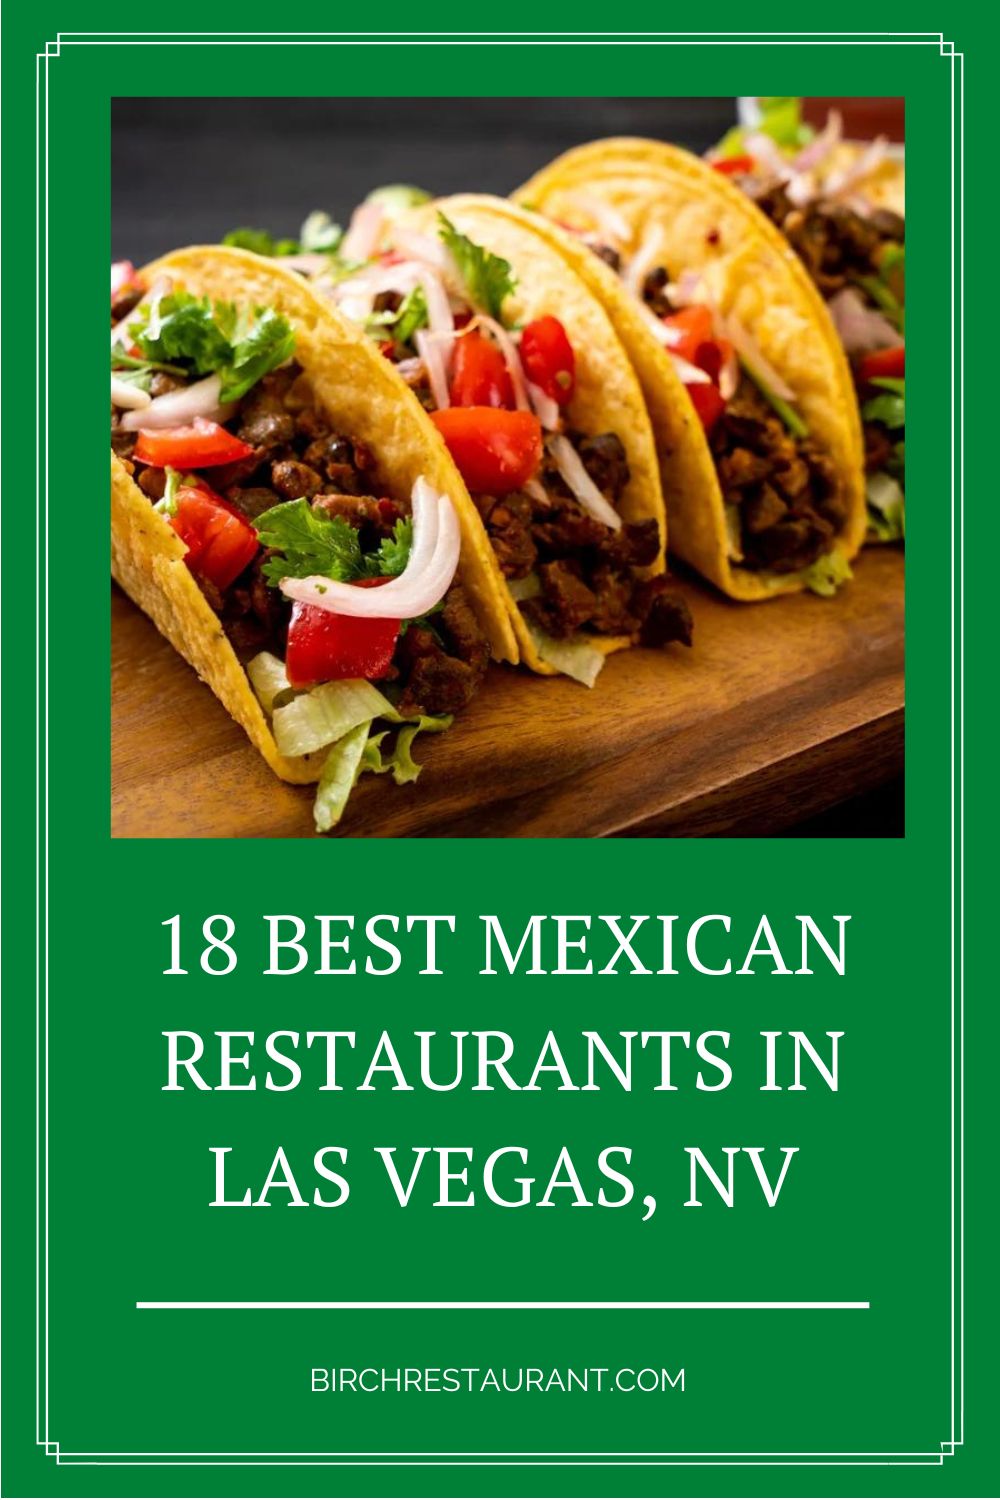 Best Mexican Restaurants in Las Vegas